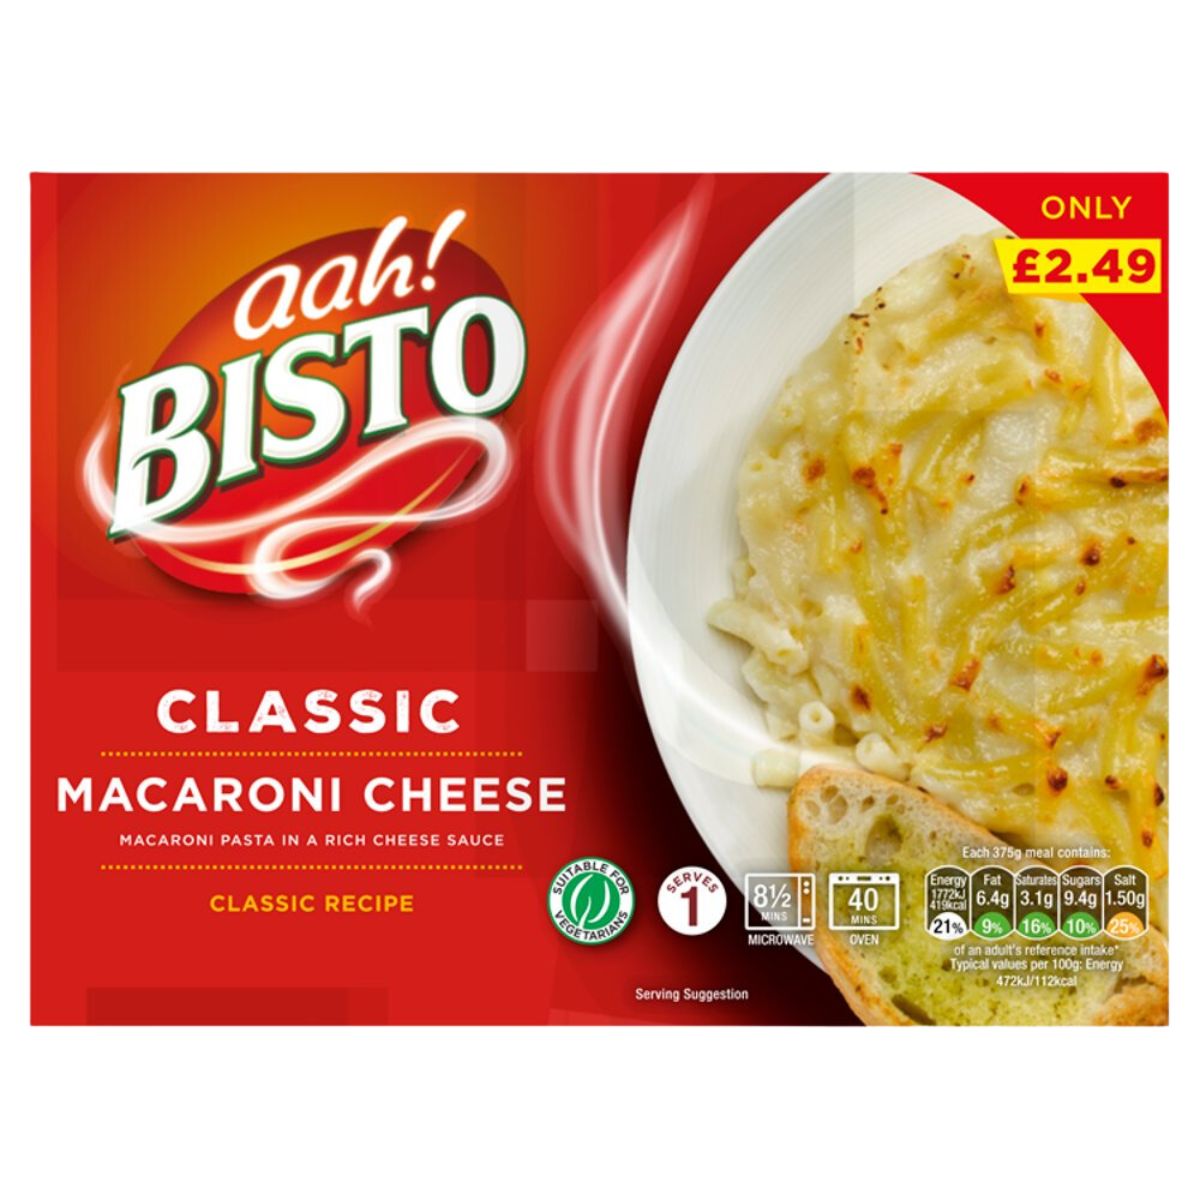 A box of Bisto - Classic Macaroni Cheese - 375g.